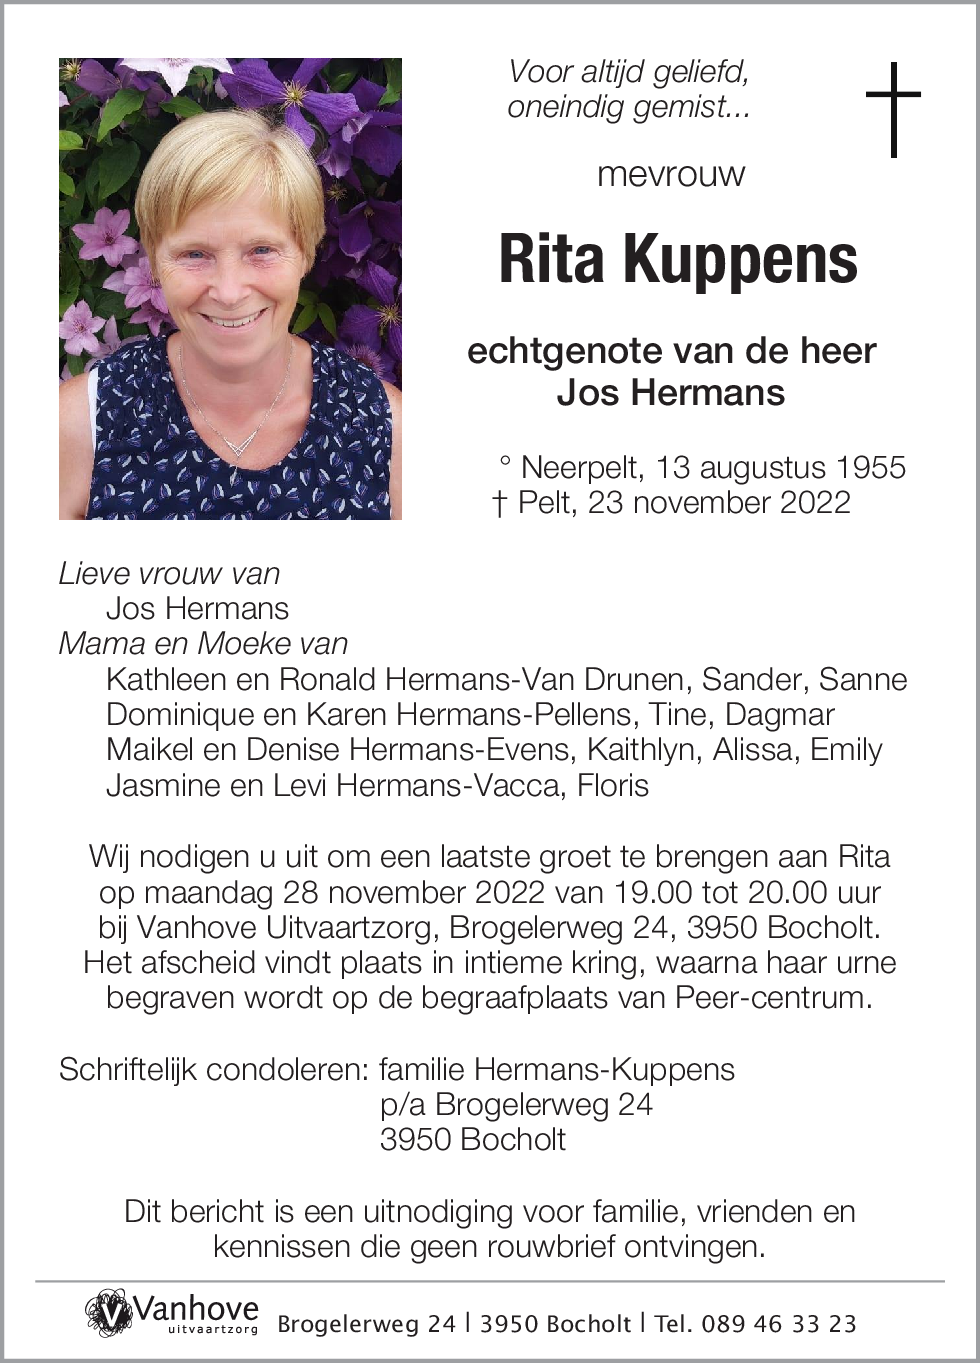 Rita Kuppens